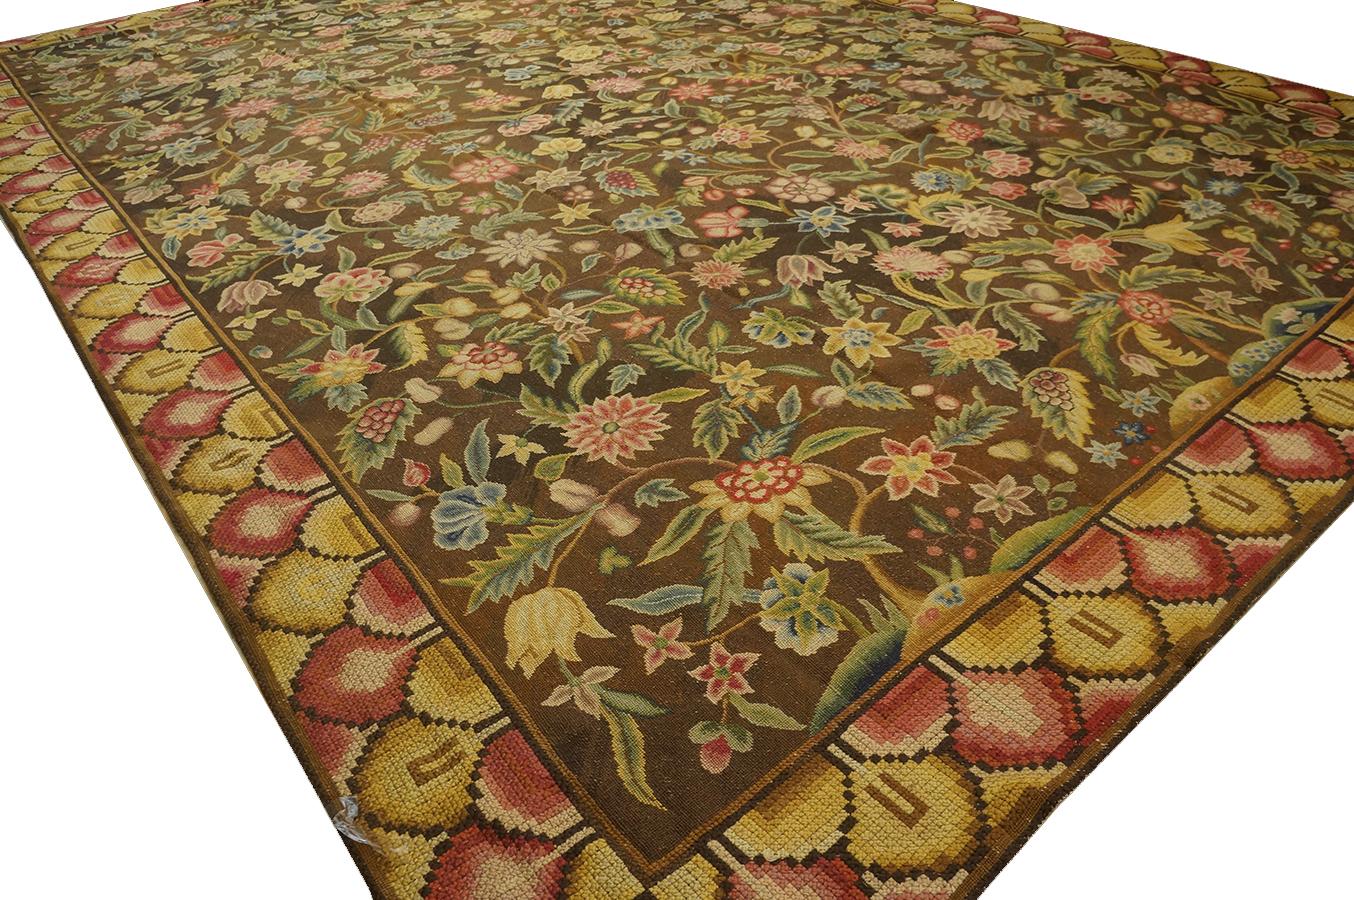 18th Century English George III Needlepoint Carpet 
13'4